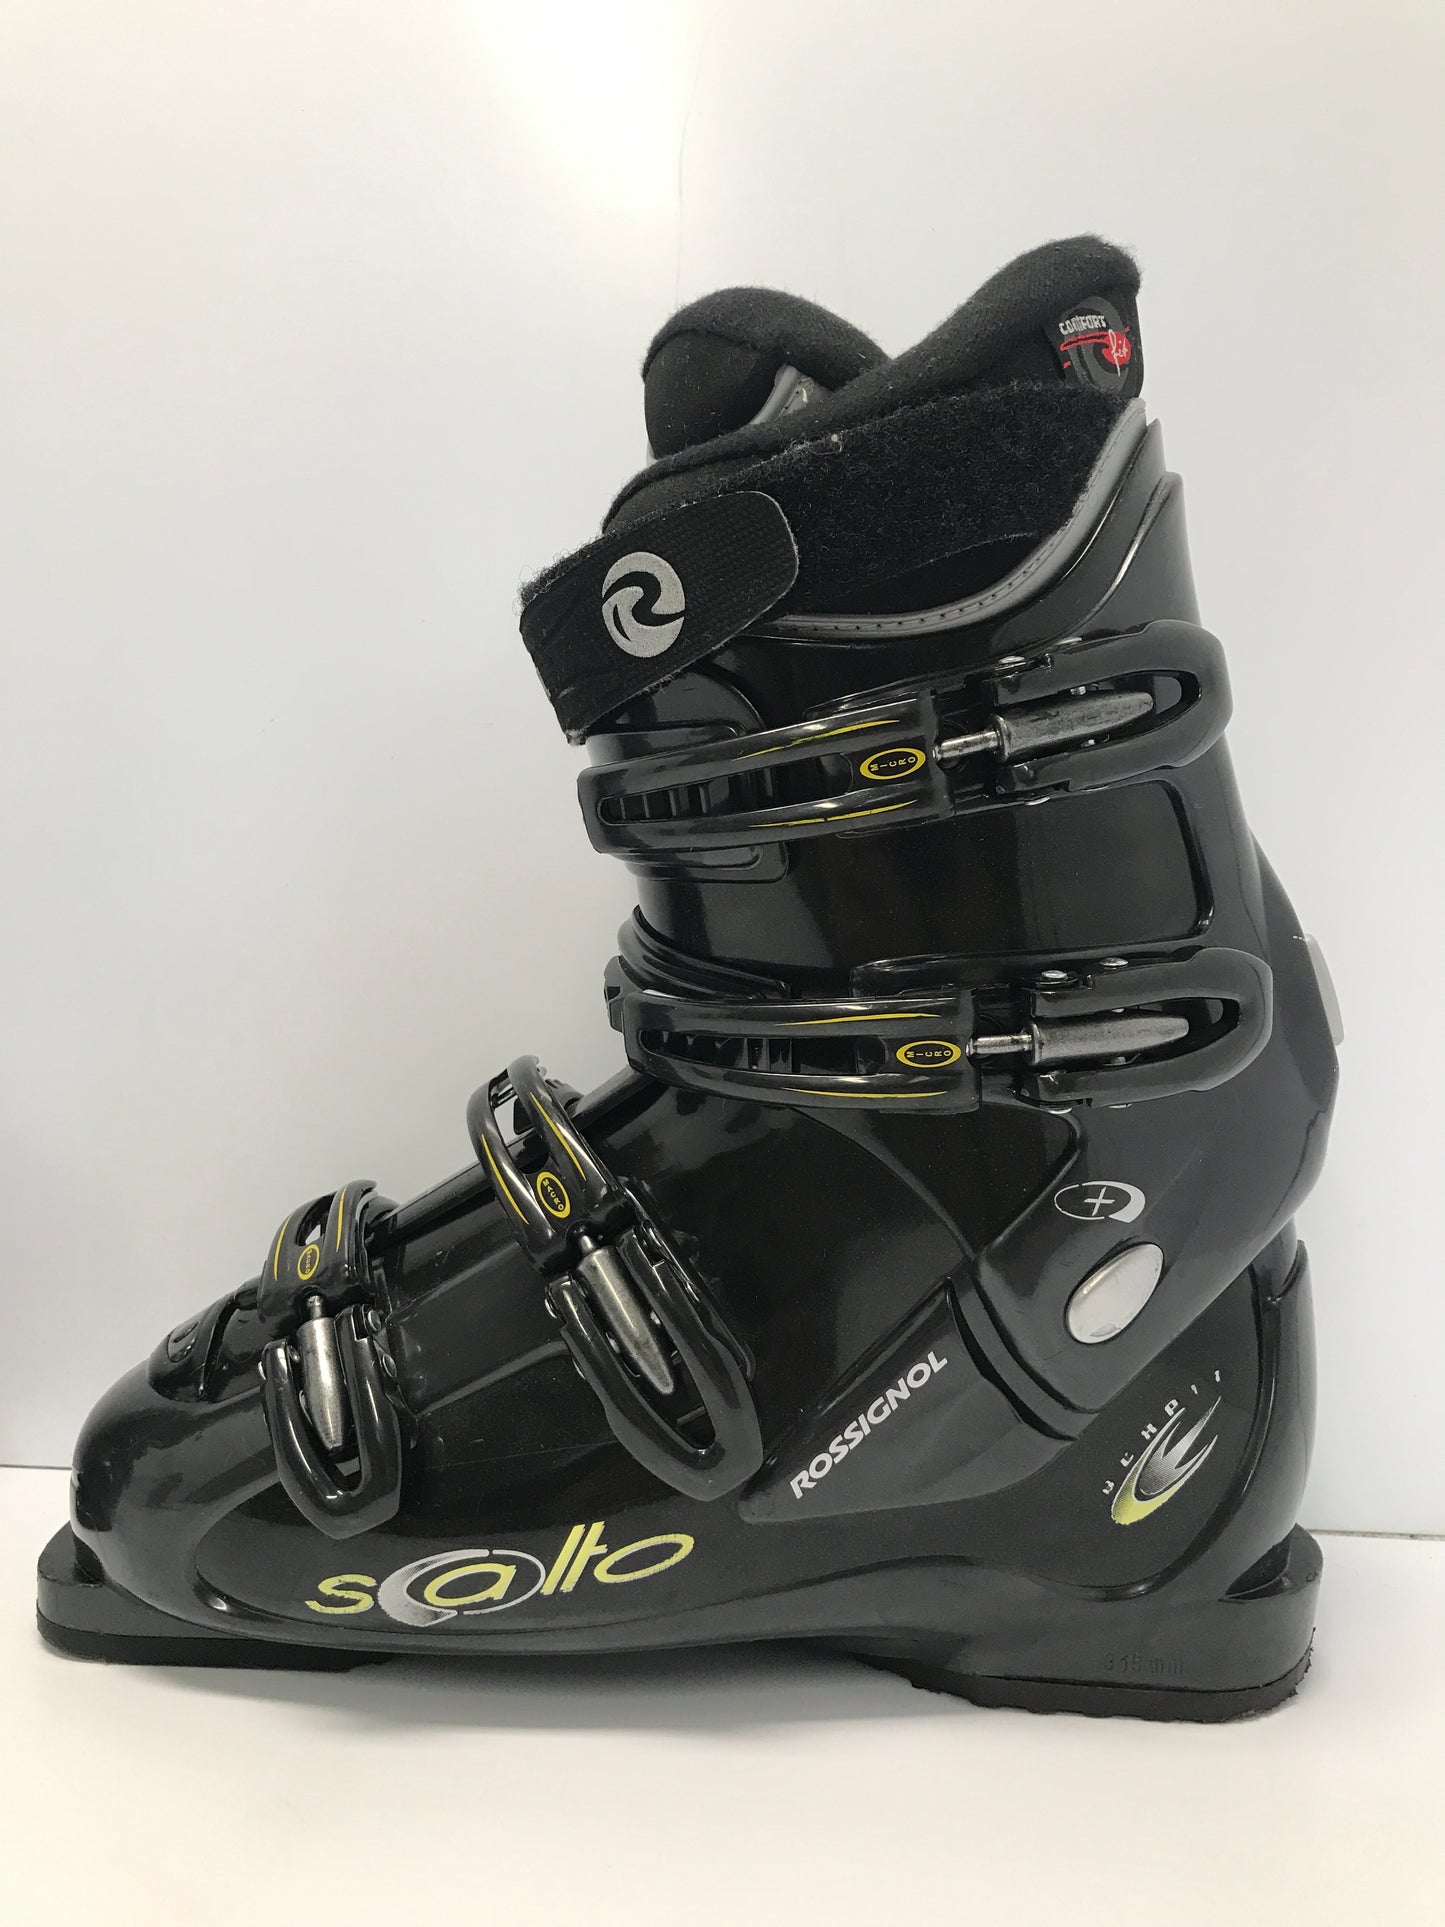 Ski Boots Mondo Size 27.5 Men's Size 9.5 Ladies size 10.5 315 mm Rossignol Black Lime Like New